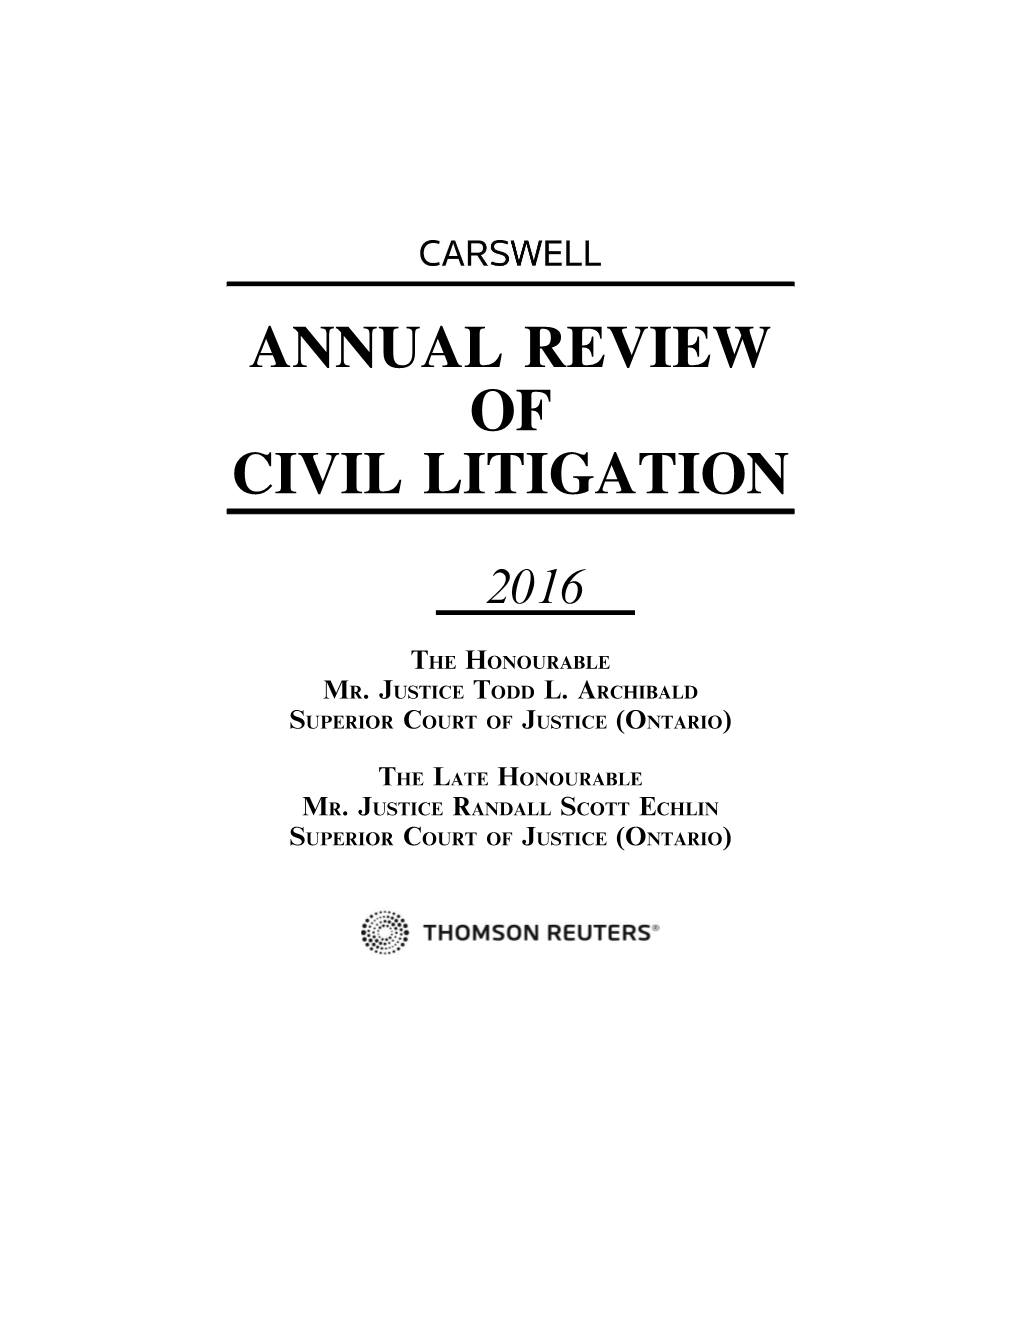 Annual Review of Civil Litigation